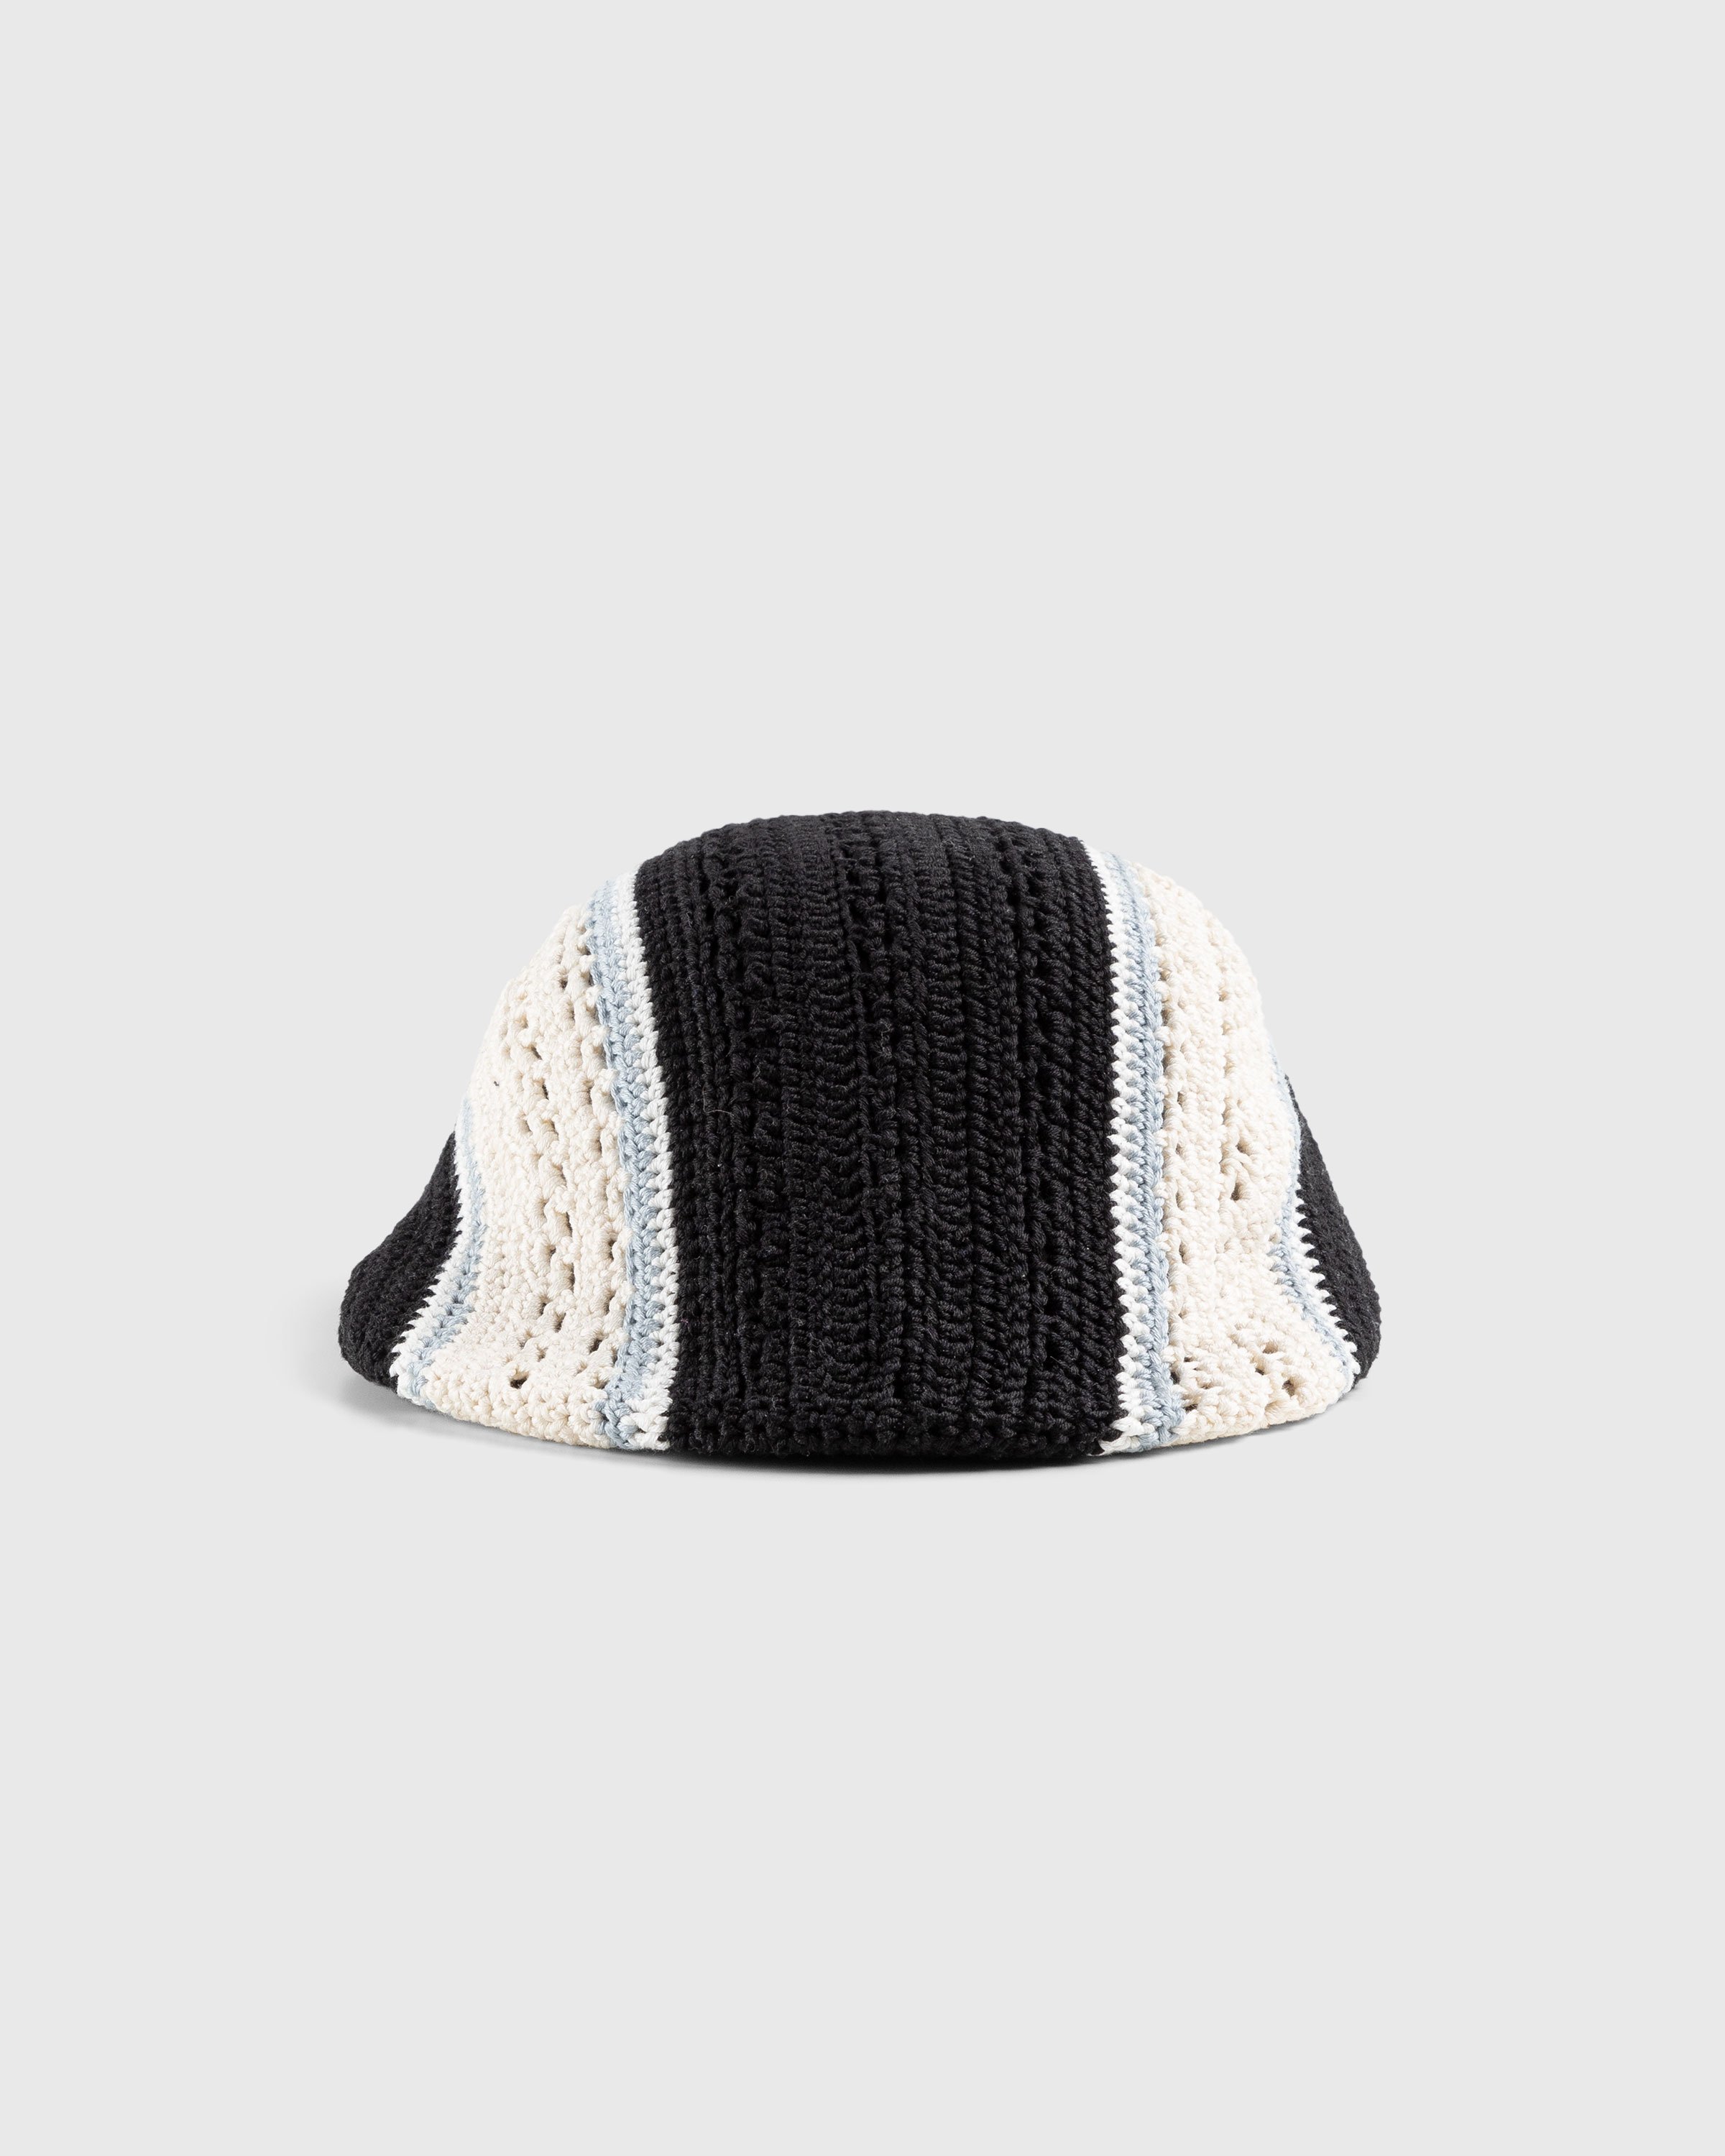 SSU - Crochet Flat Hat Black/Ivory - Accessories - Black - Image 2